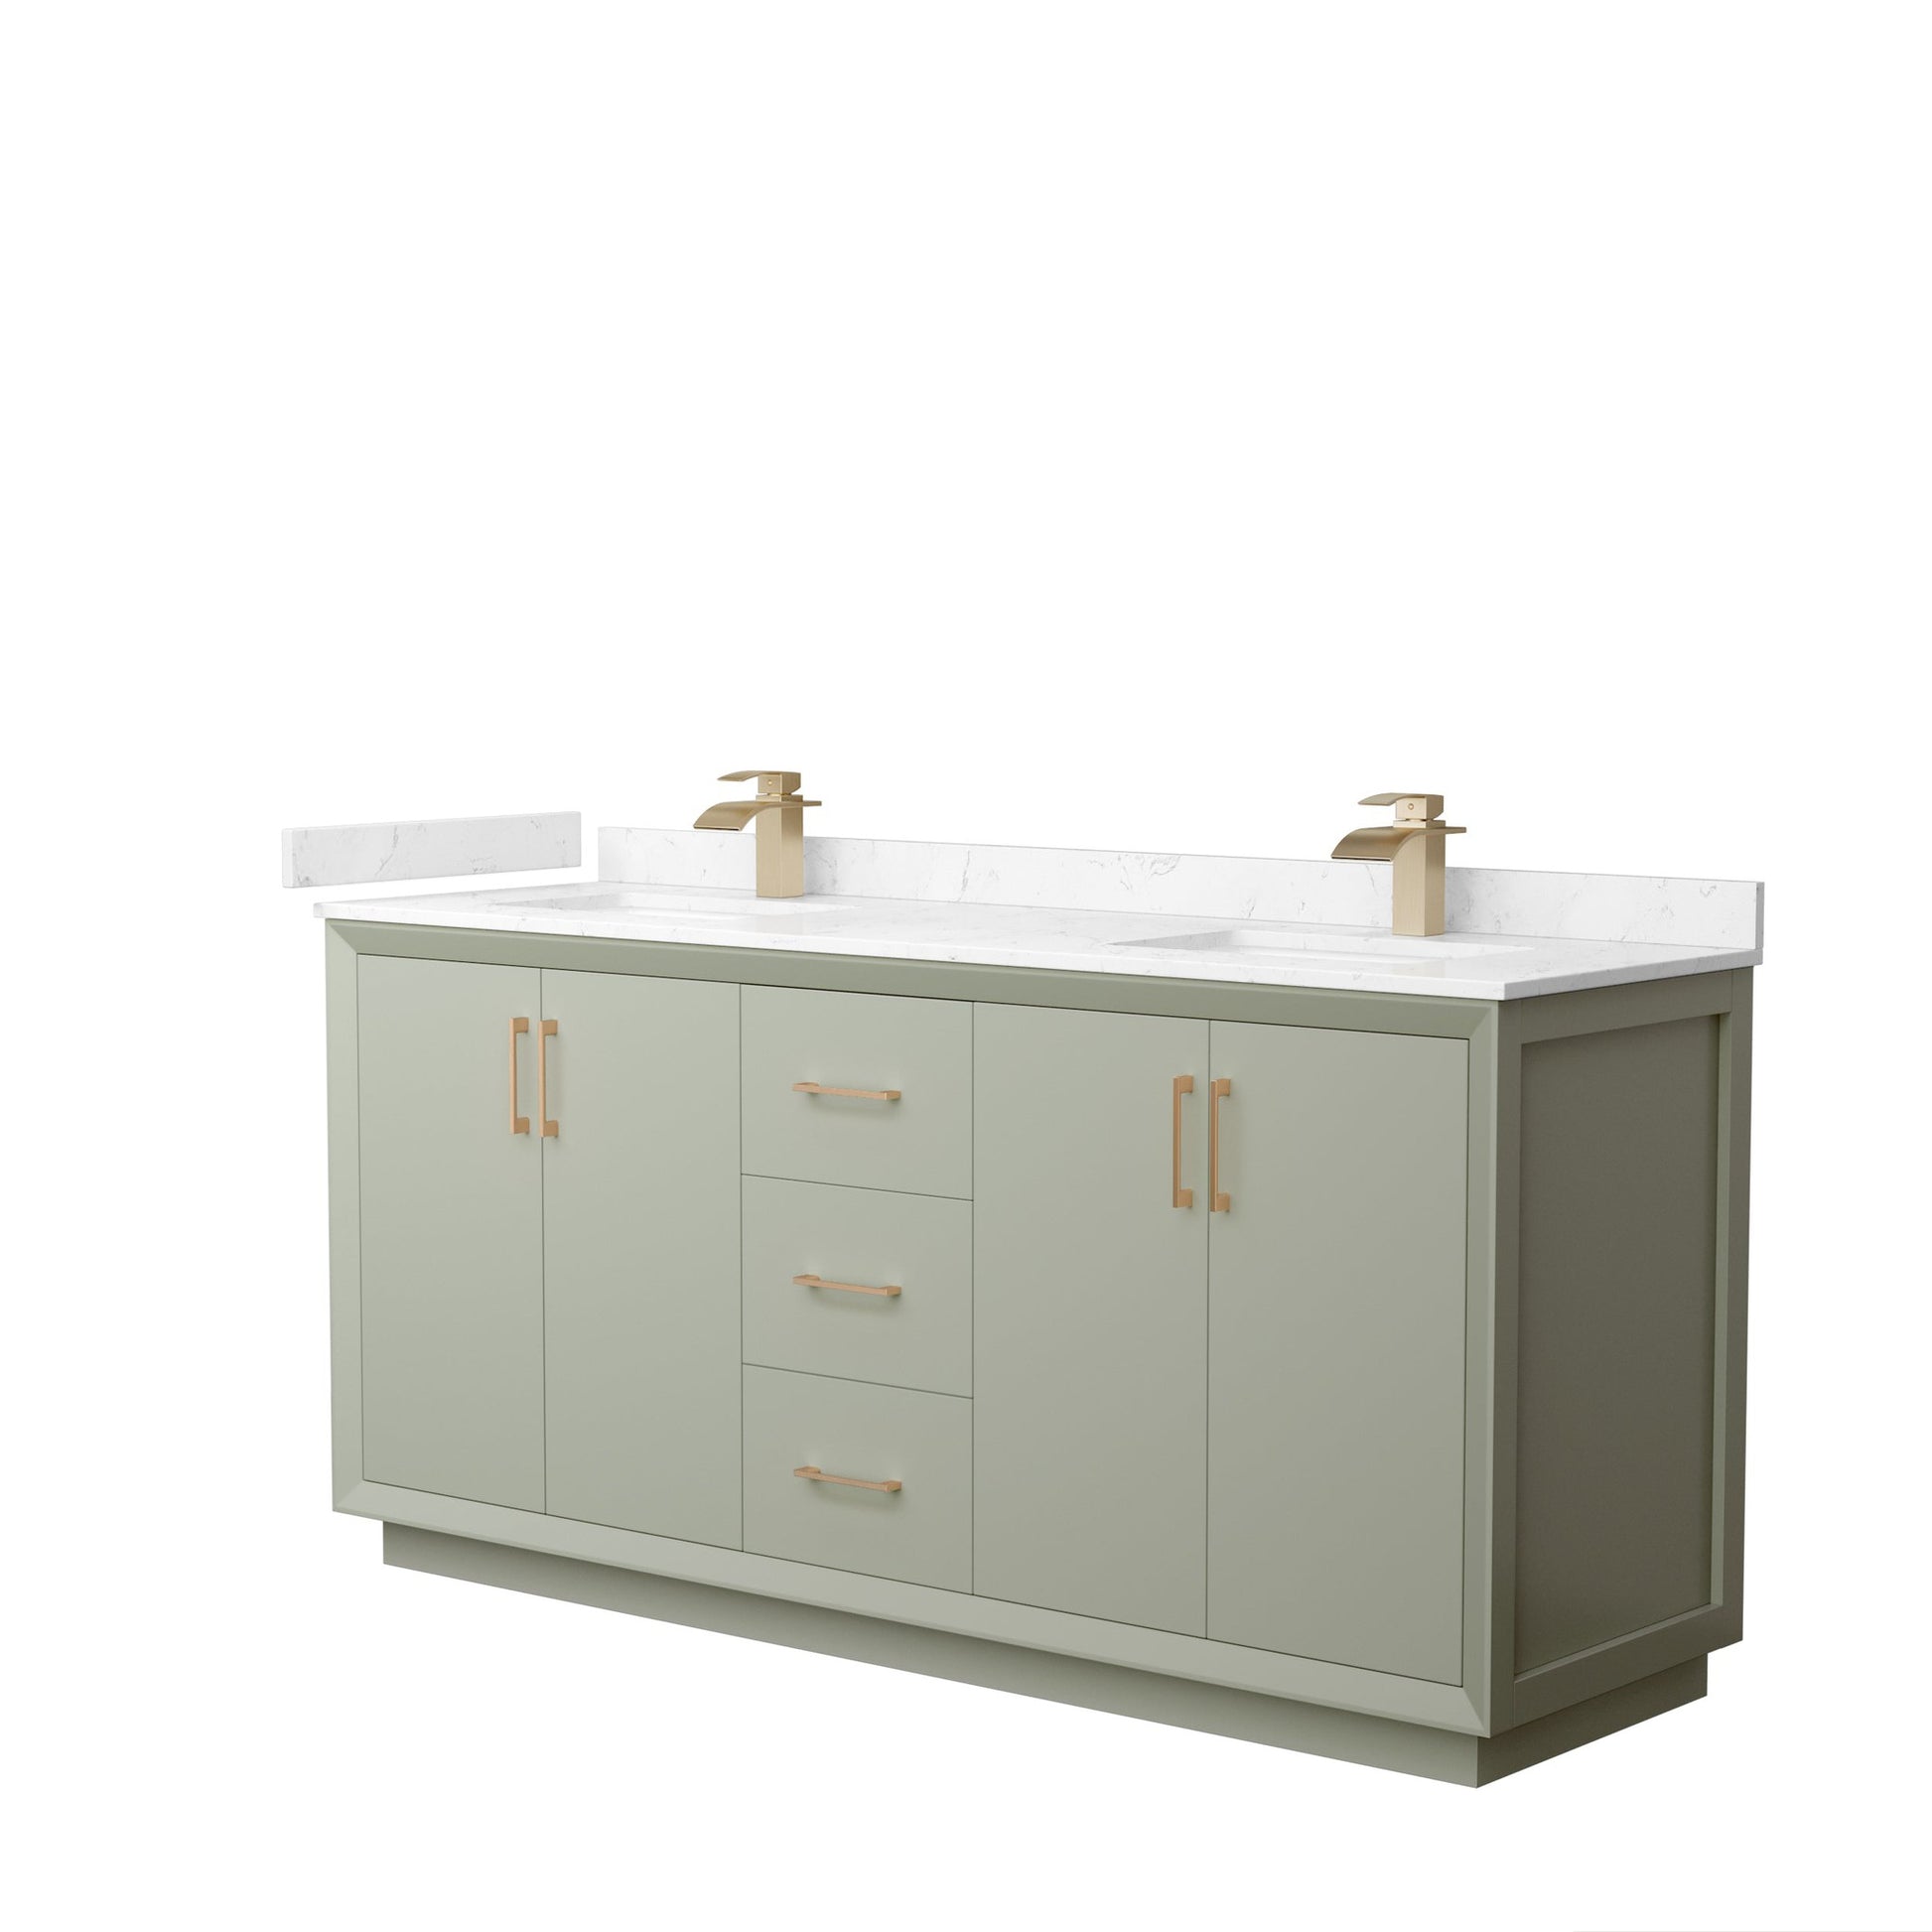 Wyndham Collection Strada 72" Double Bathroom Vanity in Light Green, Carrara Cultured Marble Countertop, Undermount Square Sinks, Satin Bronze Trim